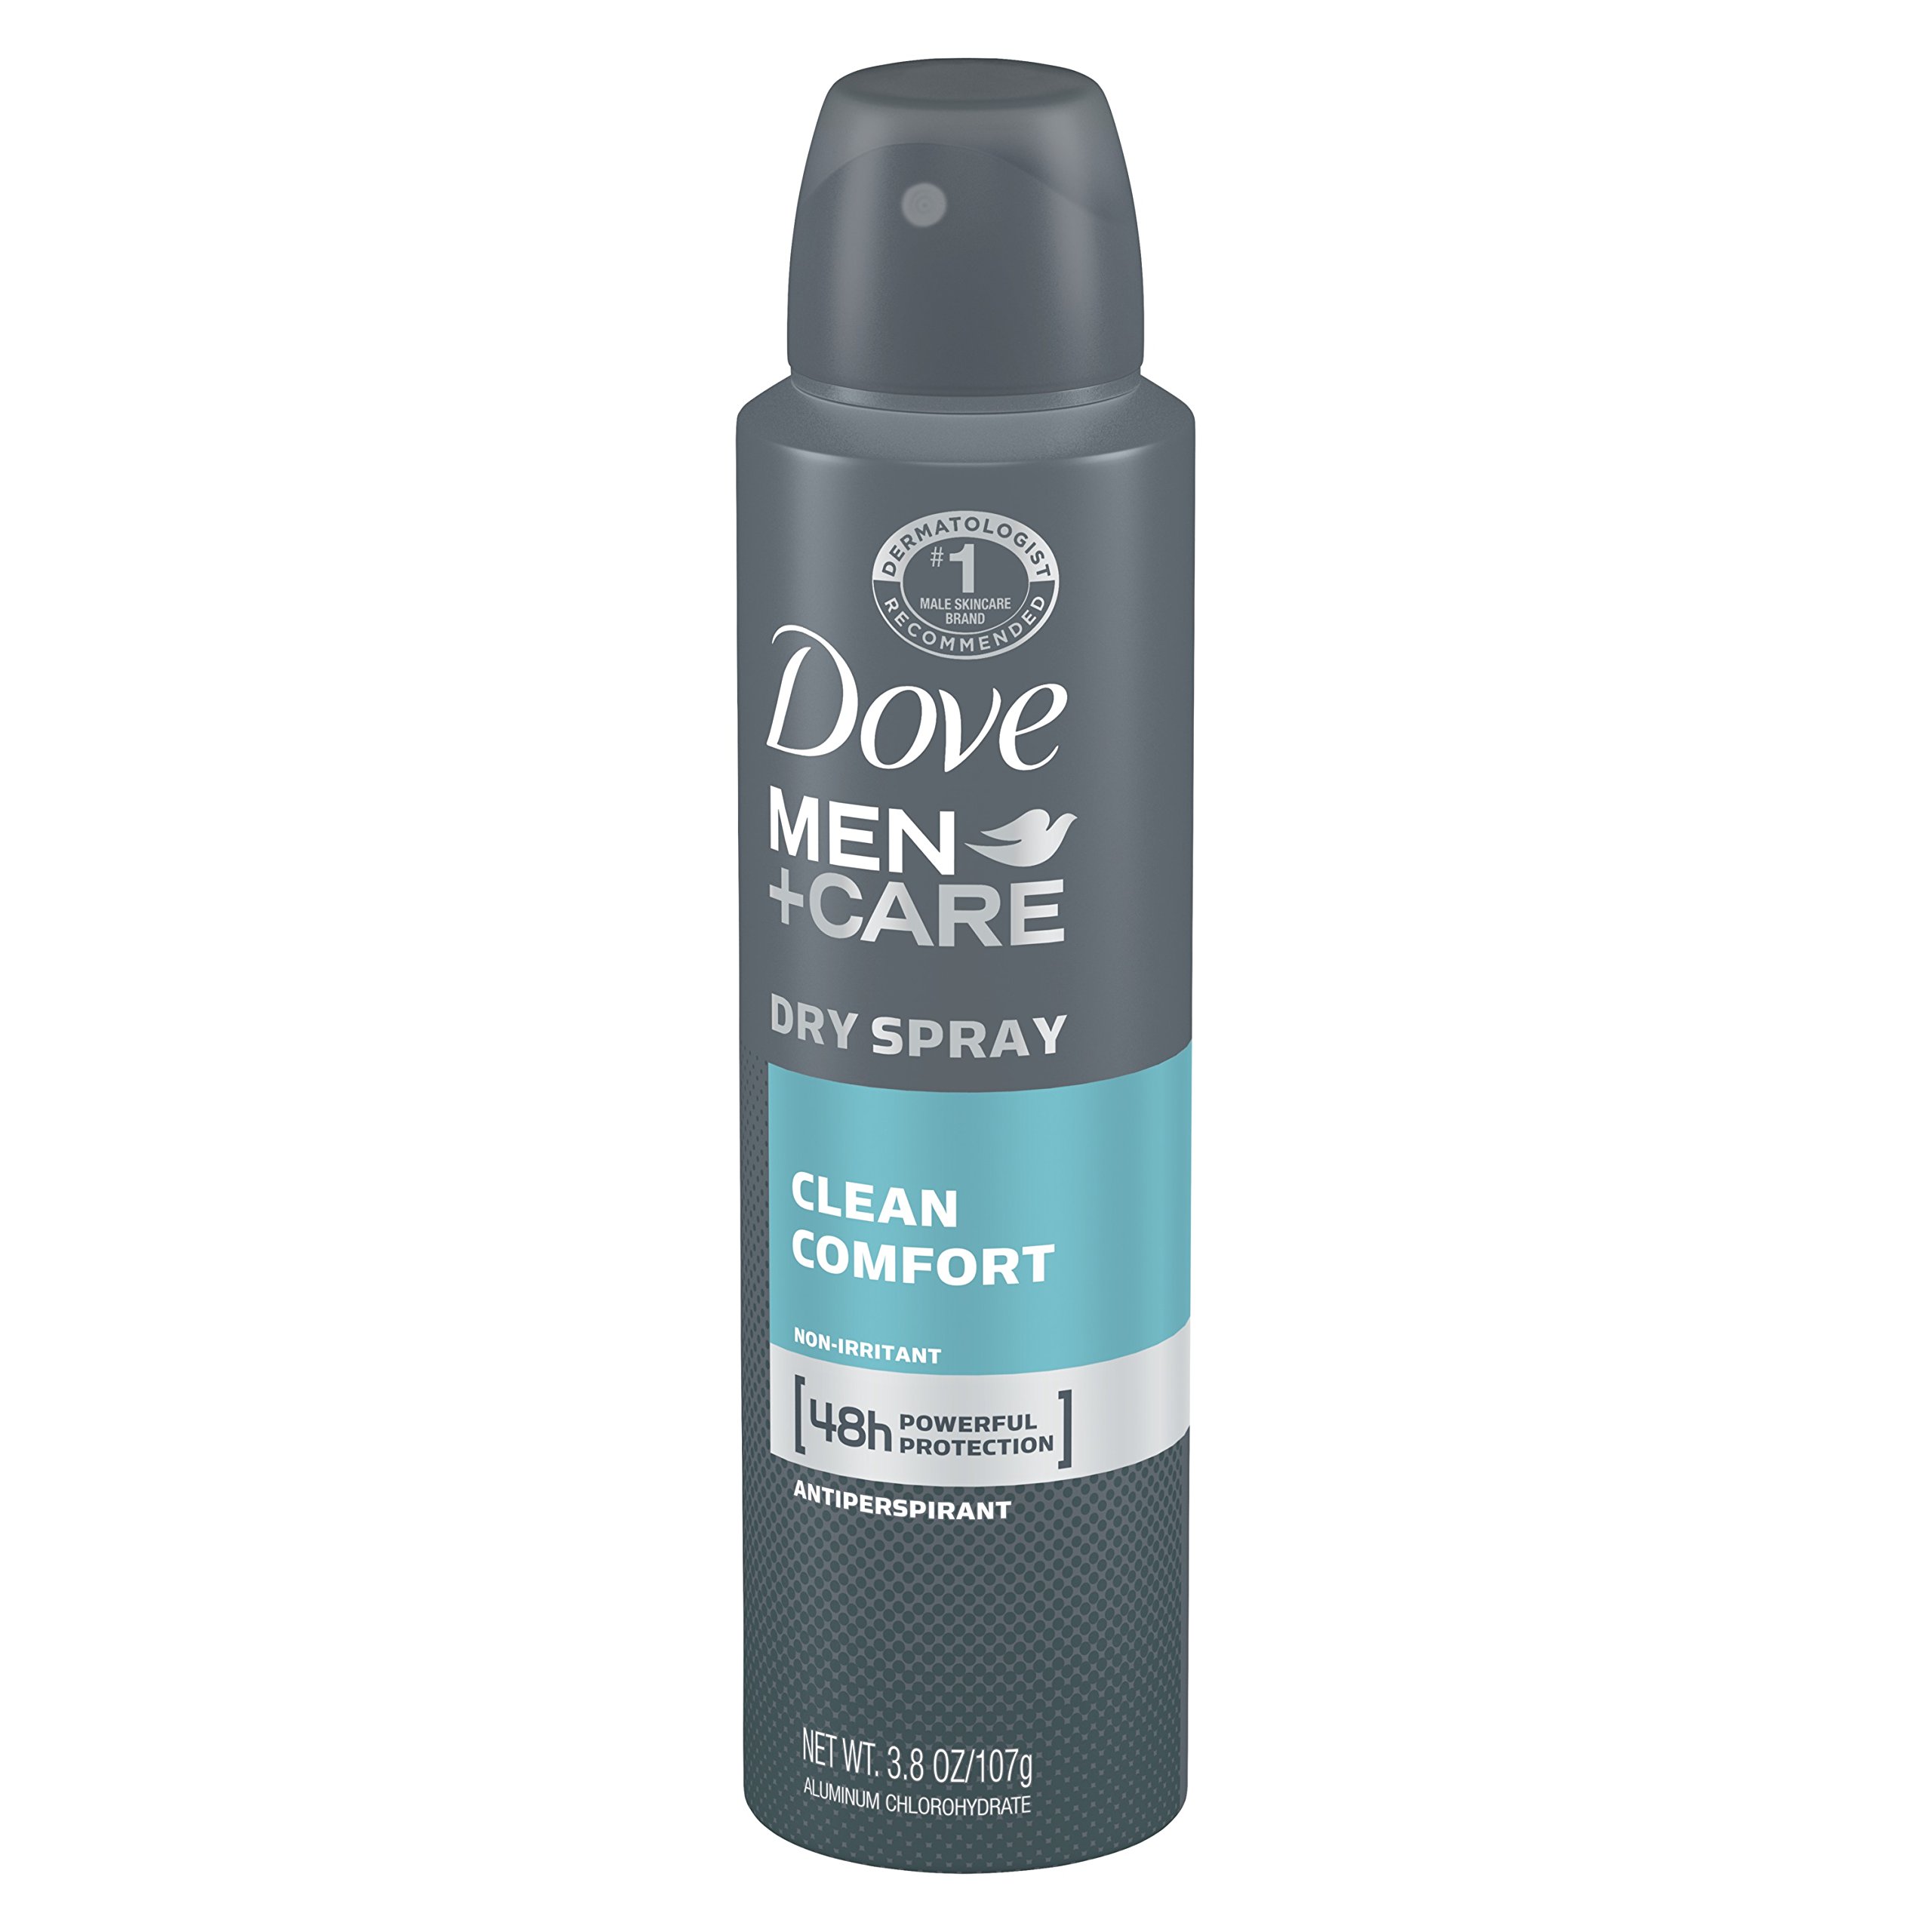 Dove Men+Care Dry Spray Antiperspirant Deodorant, Clean Comfort, 3.8 oz